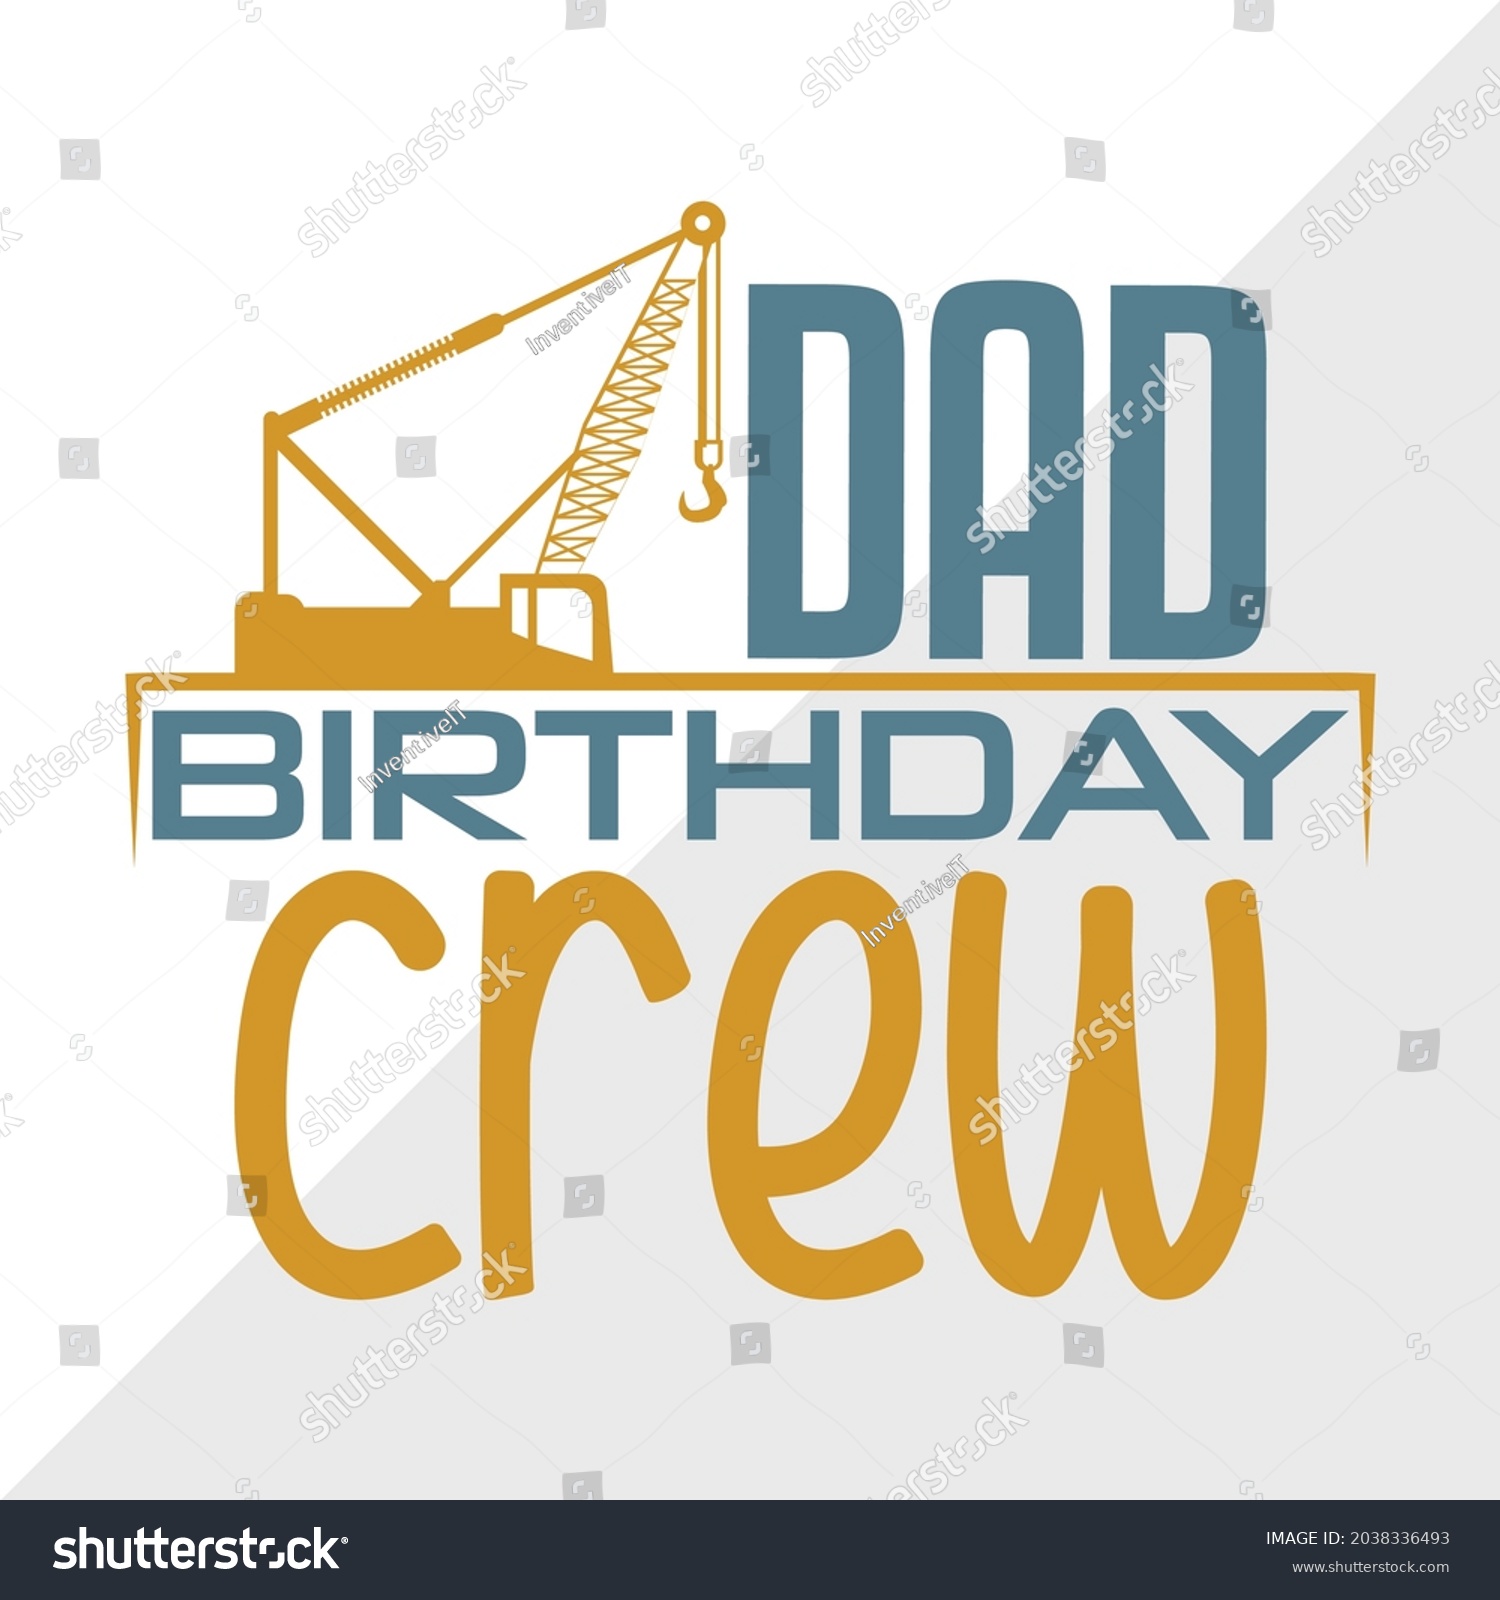 SVG of Dad Birthday Crew Printable Vector Illustration svg